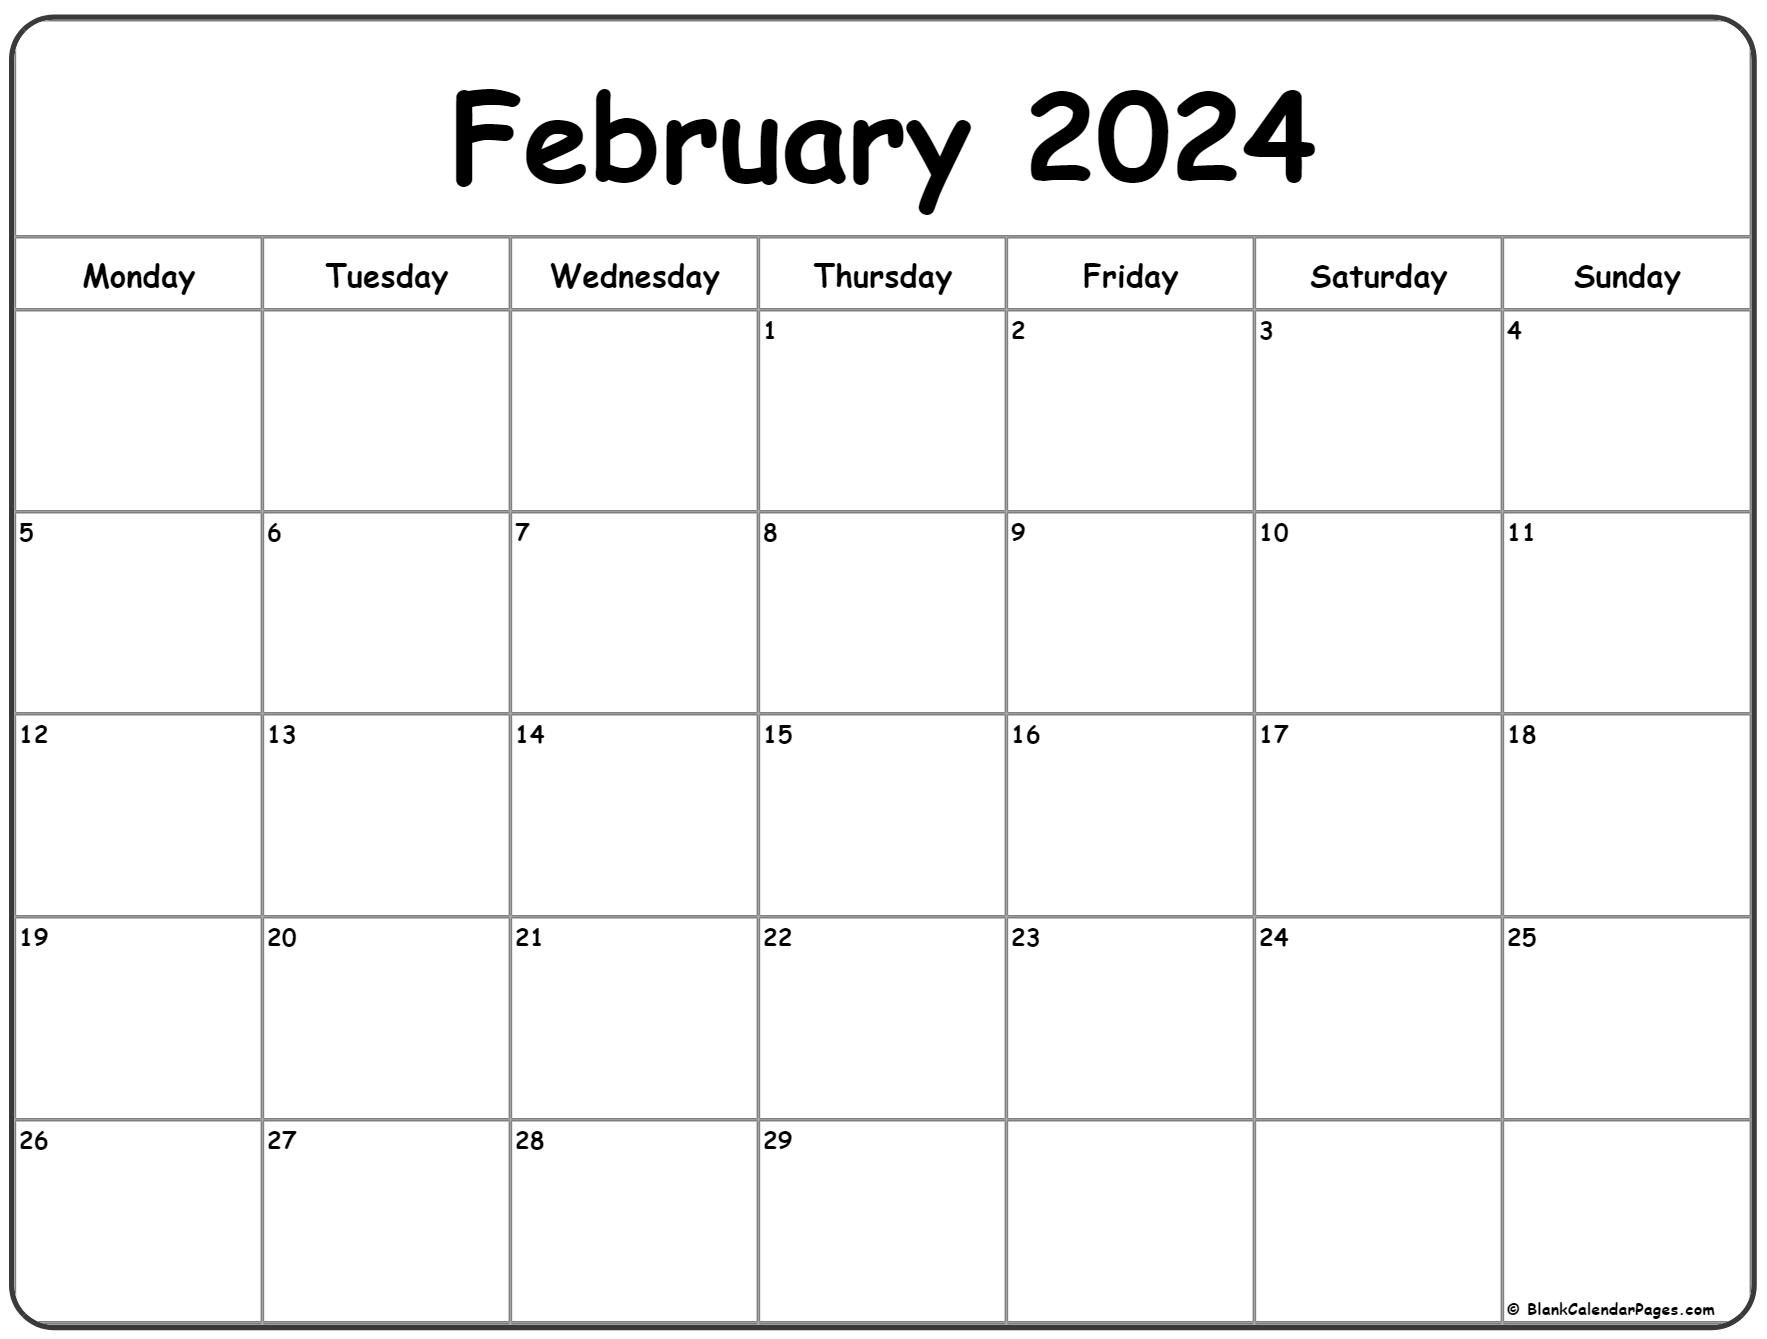 February 2022 Calendar Images February 2022 Monday Calendar | Monday To Sunday